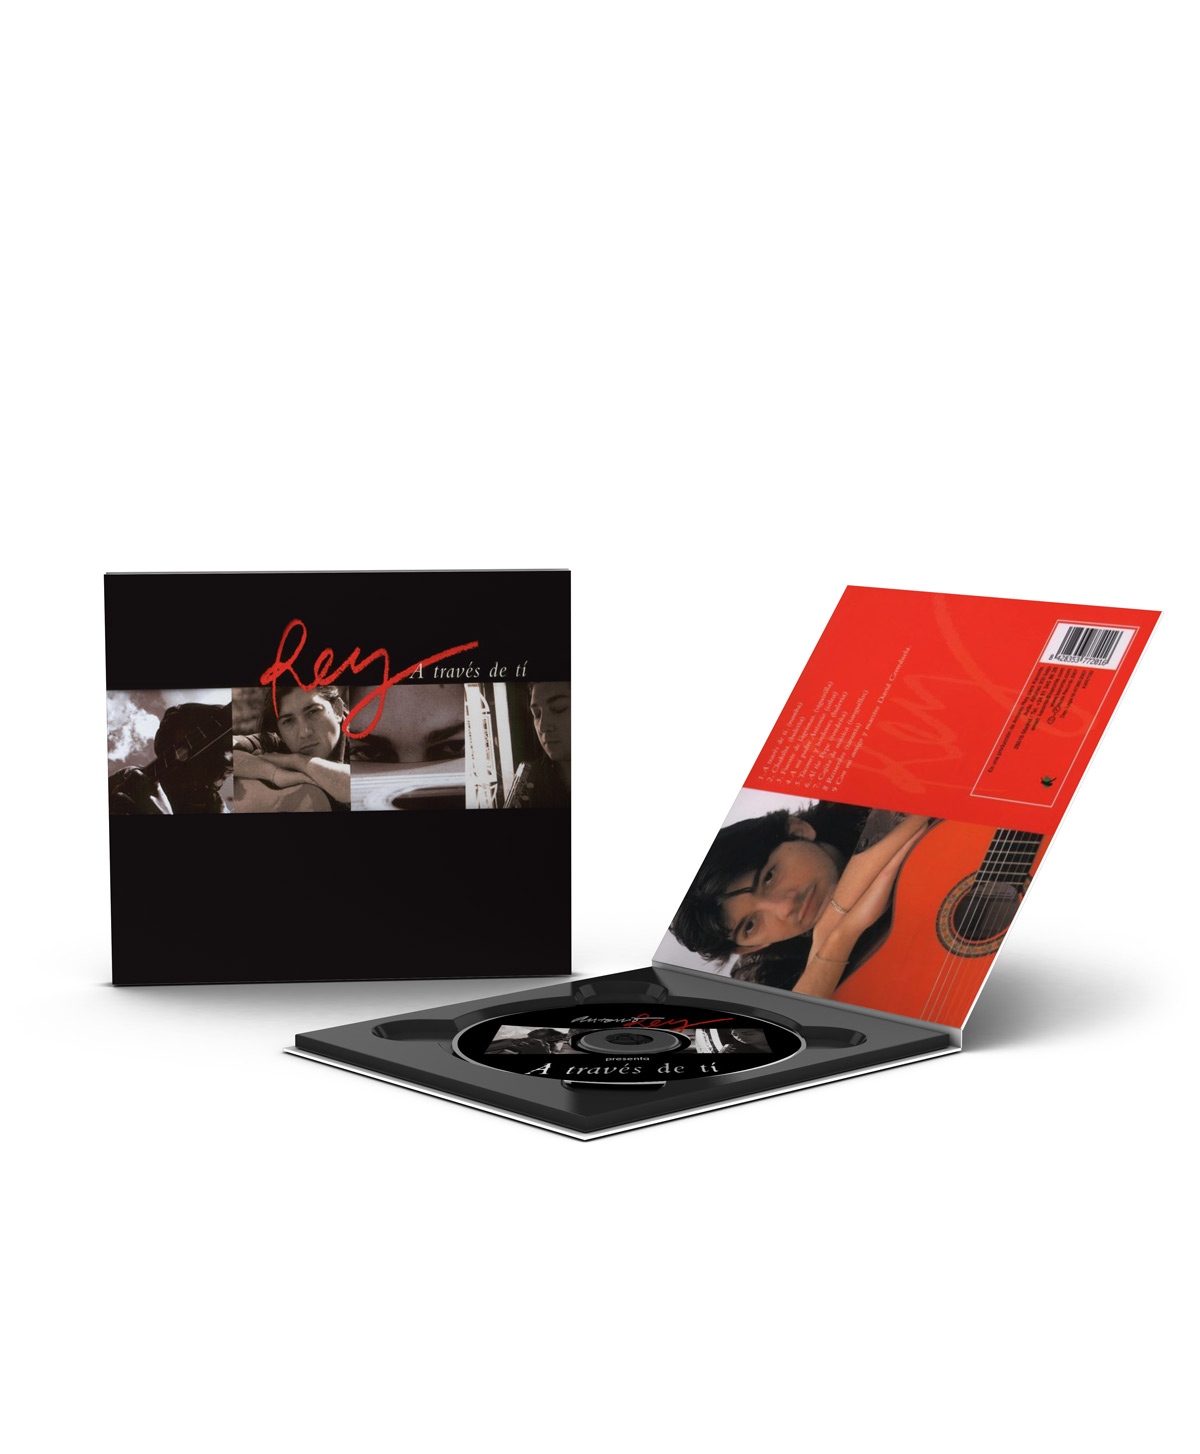 Antonio Rey flamenco CD › CD › La Sonanta - Flamenco